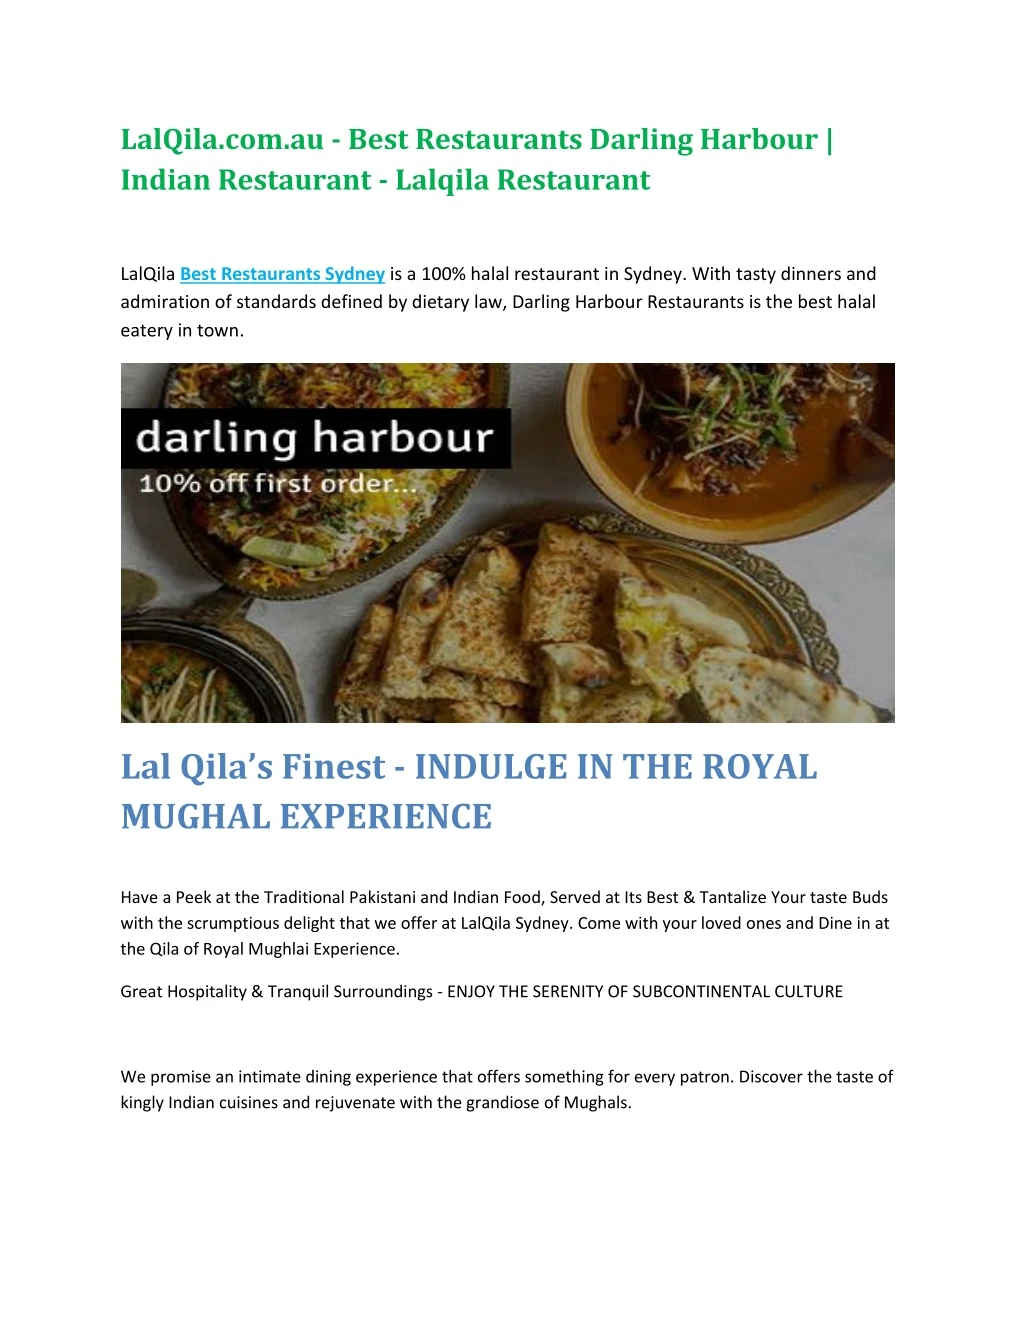 lalqila com au best restaurants darling harbour